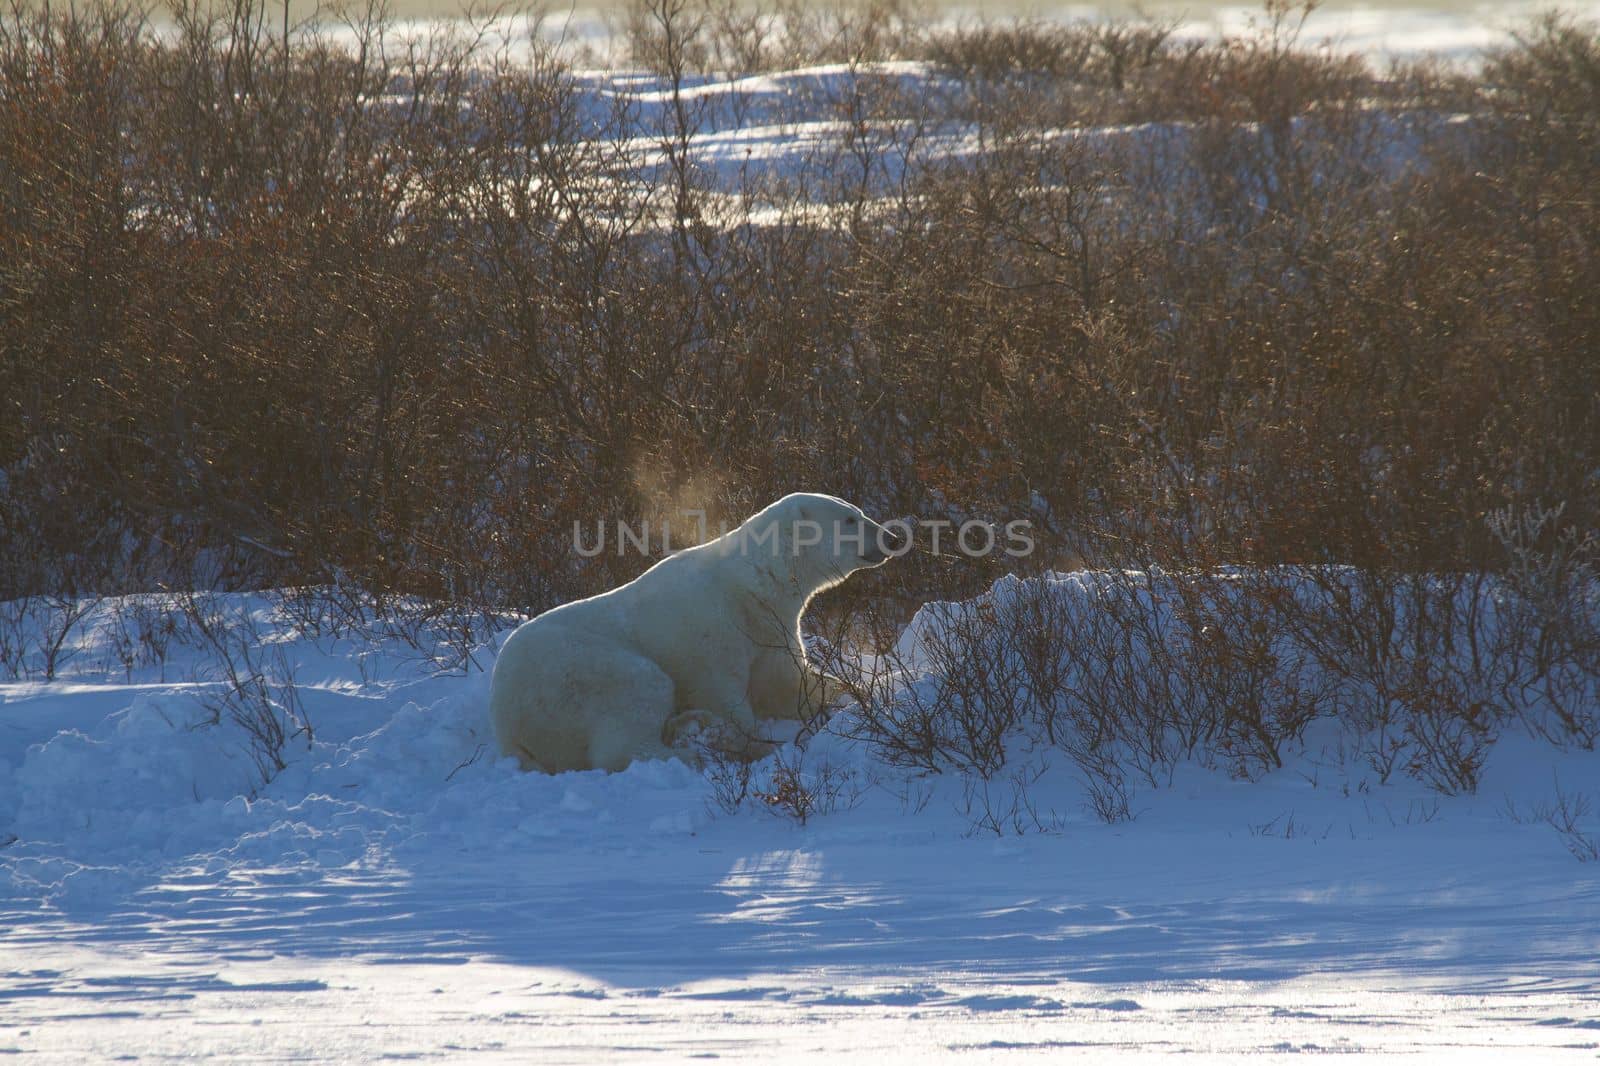 A polar bear or ursus maritumus shaking snow off with a second polar bear hiding behind willows, near Churchill, Manitoba Canada